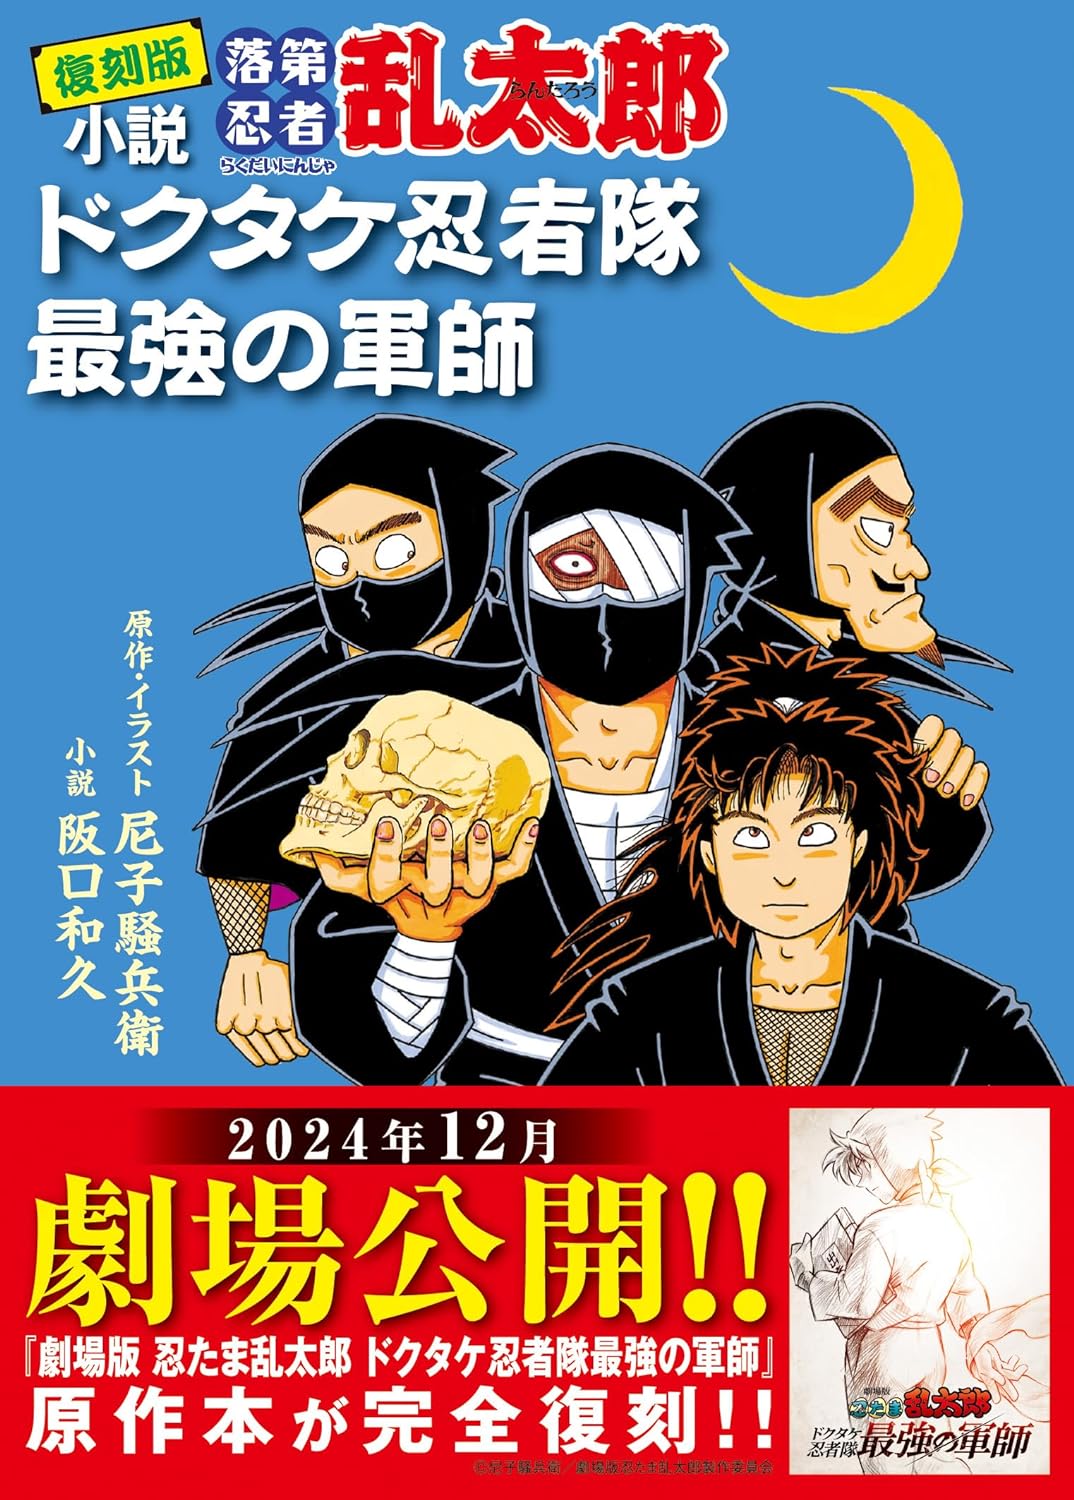  переиздание повесть . no. ninja . Taro doktake ninja . сильнейший армия .(... комиксы )